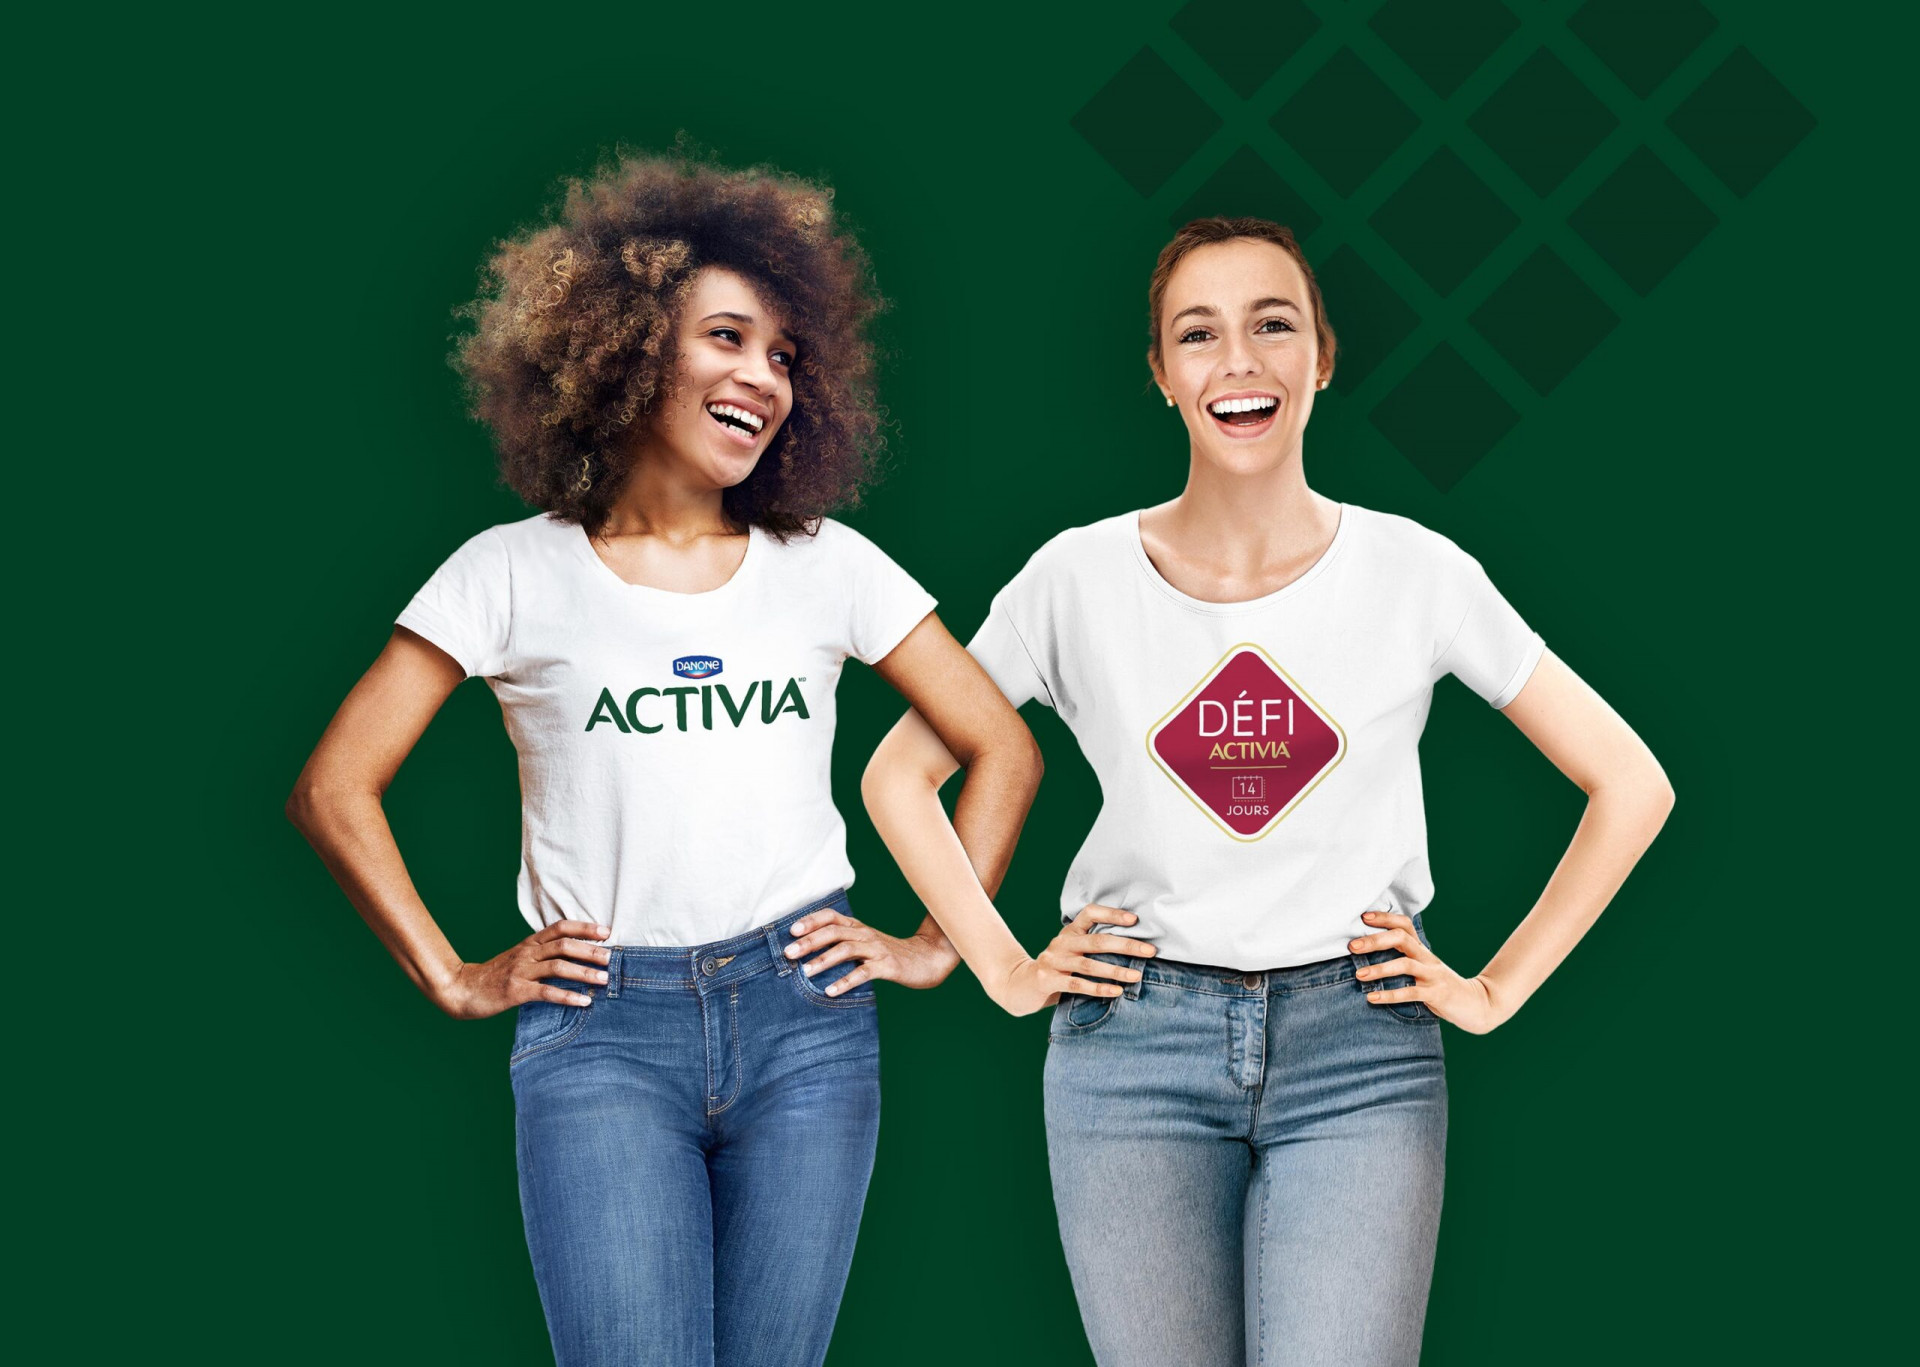 Activia - Refreshing the Activia Challenge